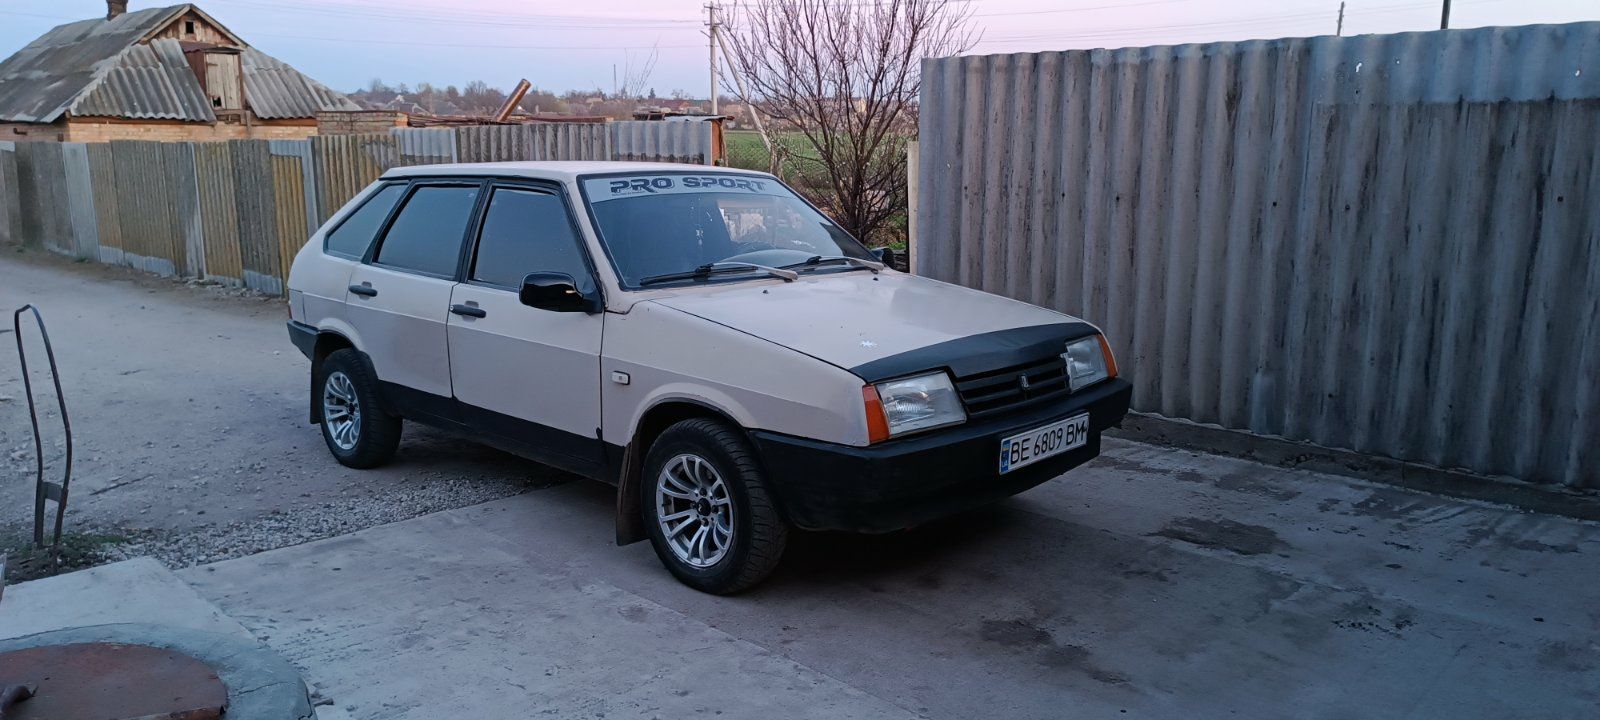 Продам ВАЗ 2109 1998г